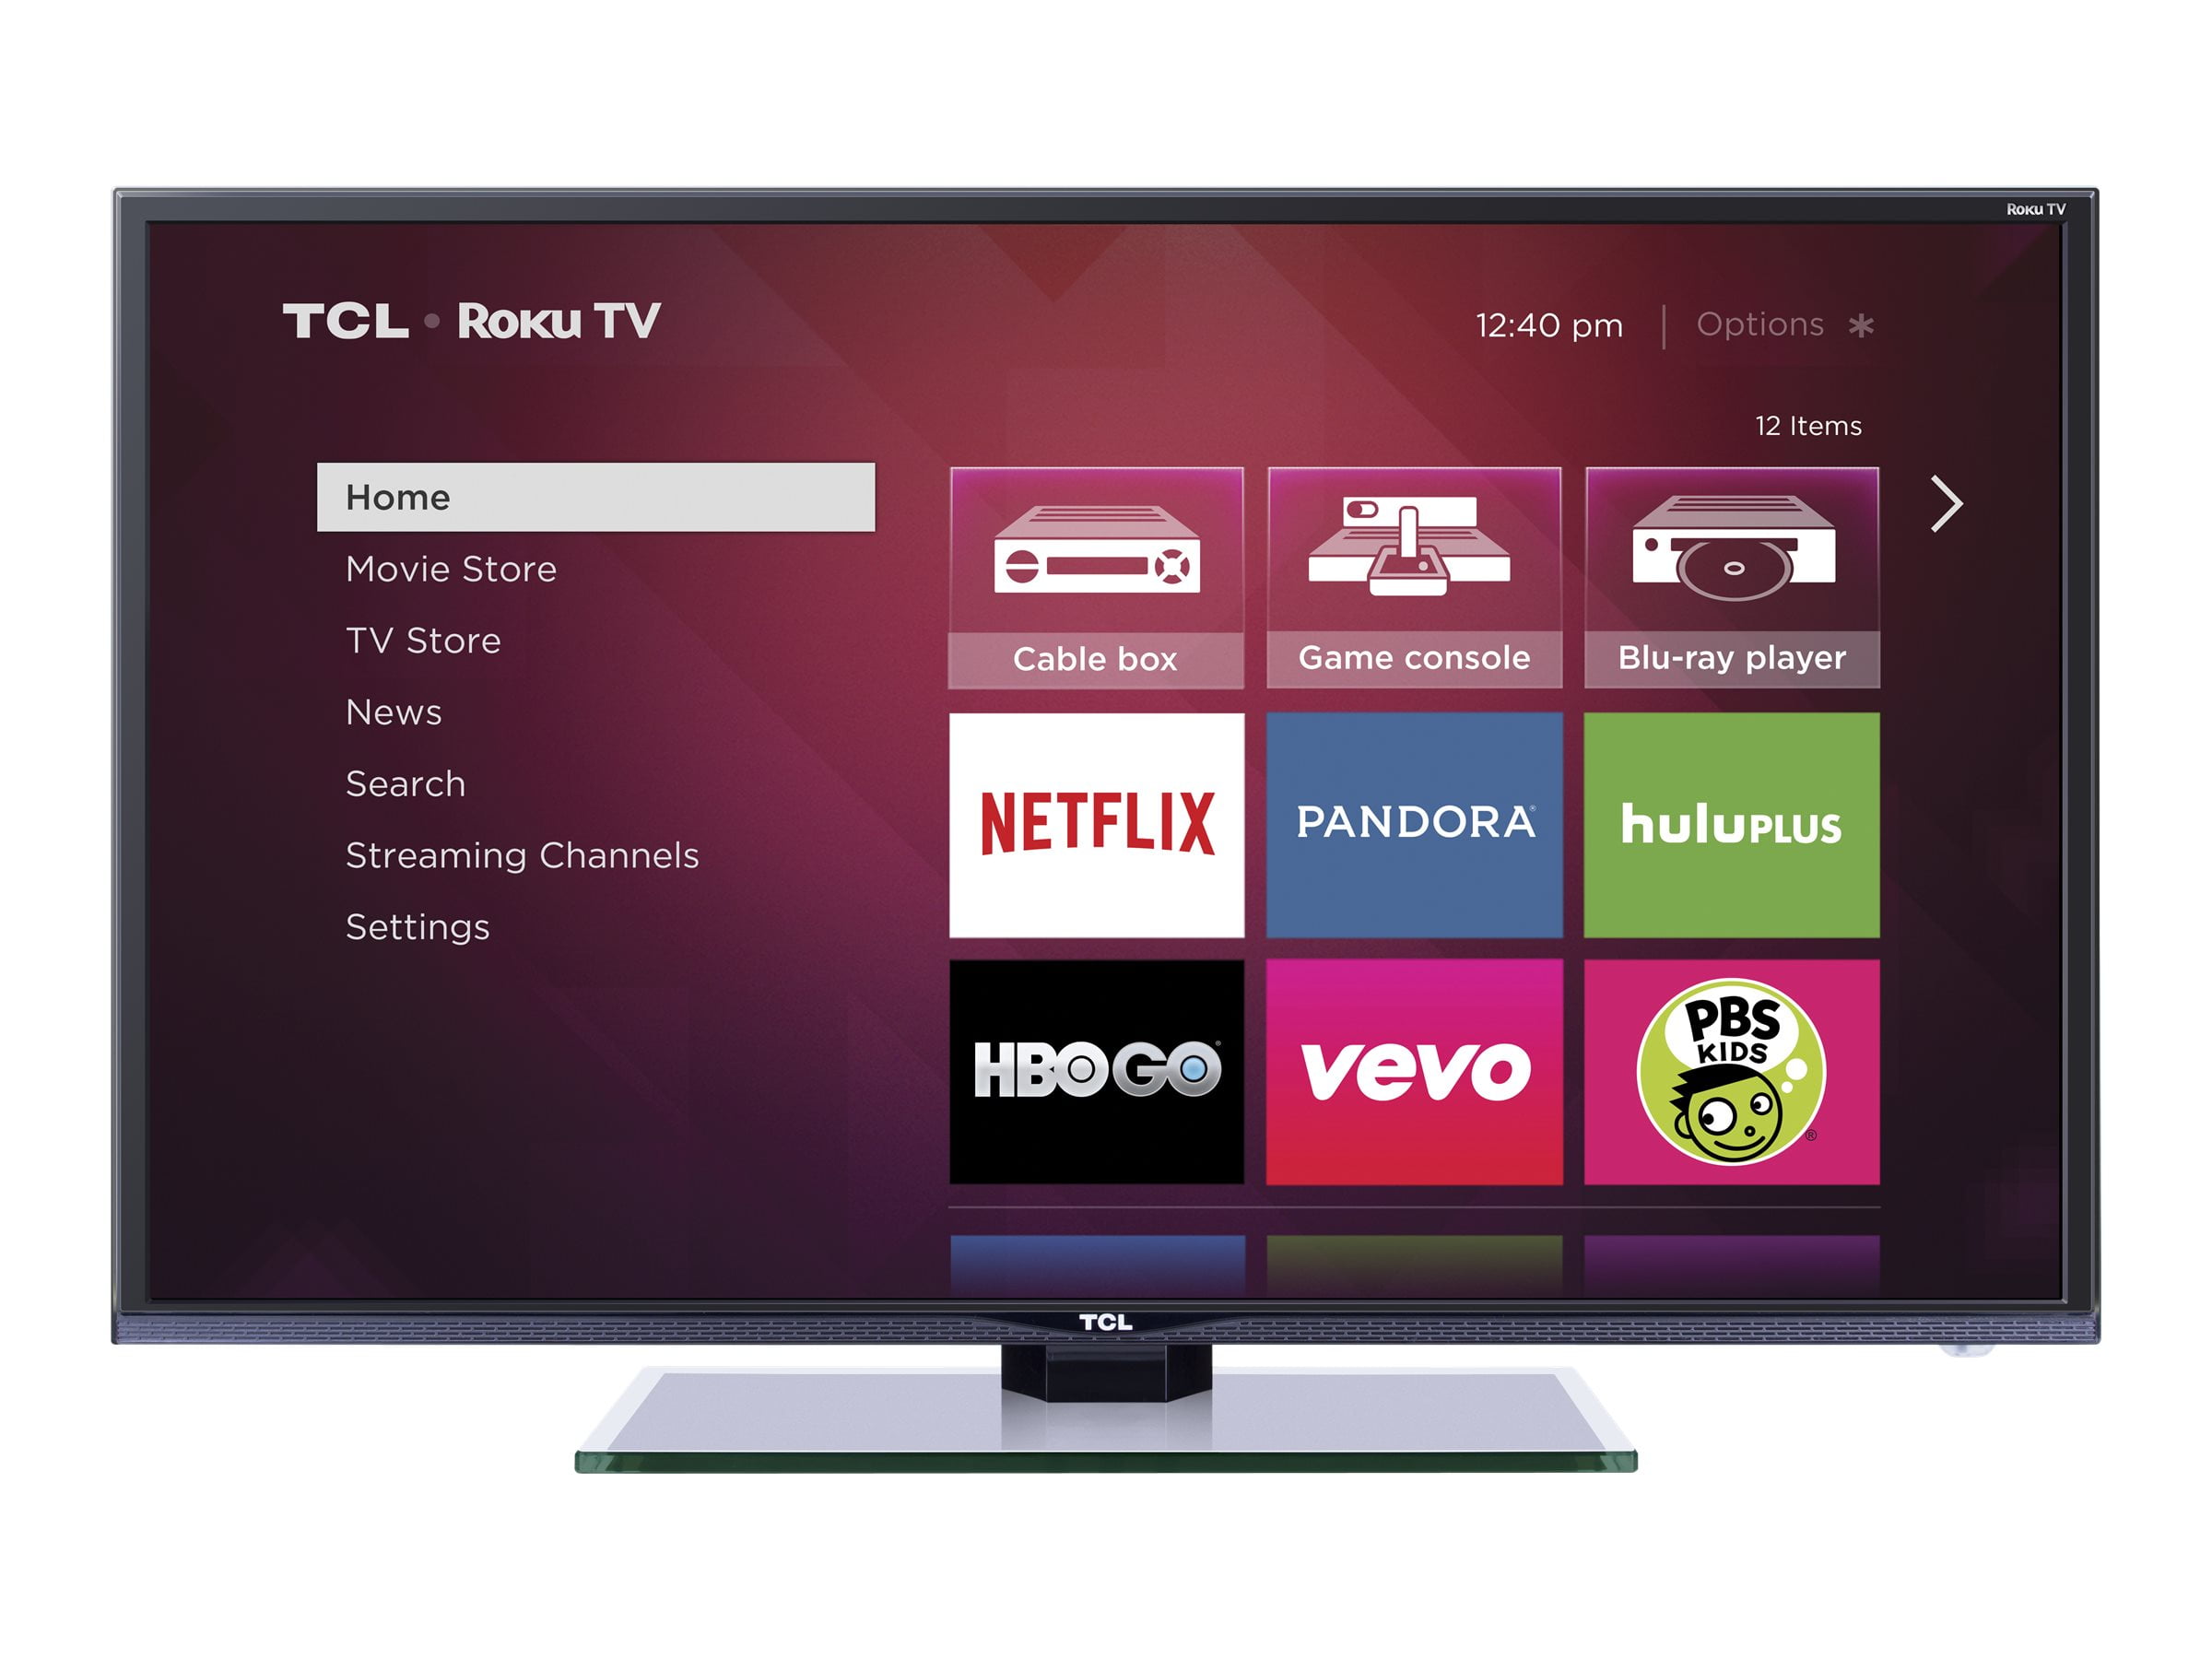 TCL Roku TV 32S3700 - 32" Diagonal Class (31.5" viewable) LED TV